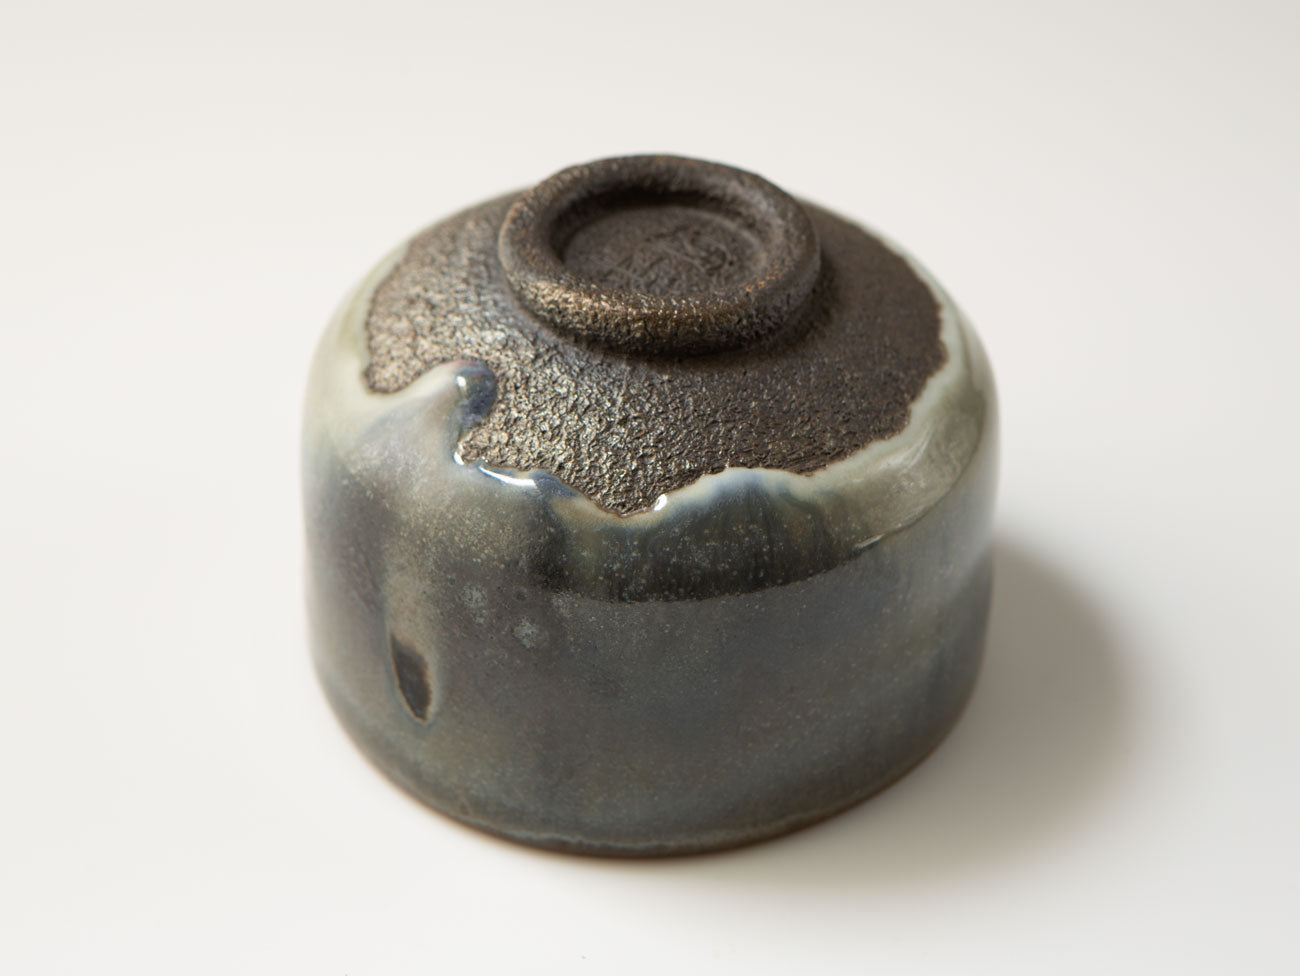 Turner Wood-fired Tea Bowl, Liao Guo Hua